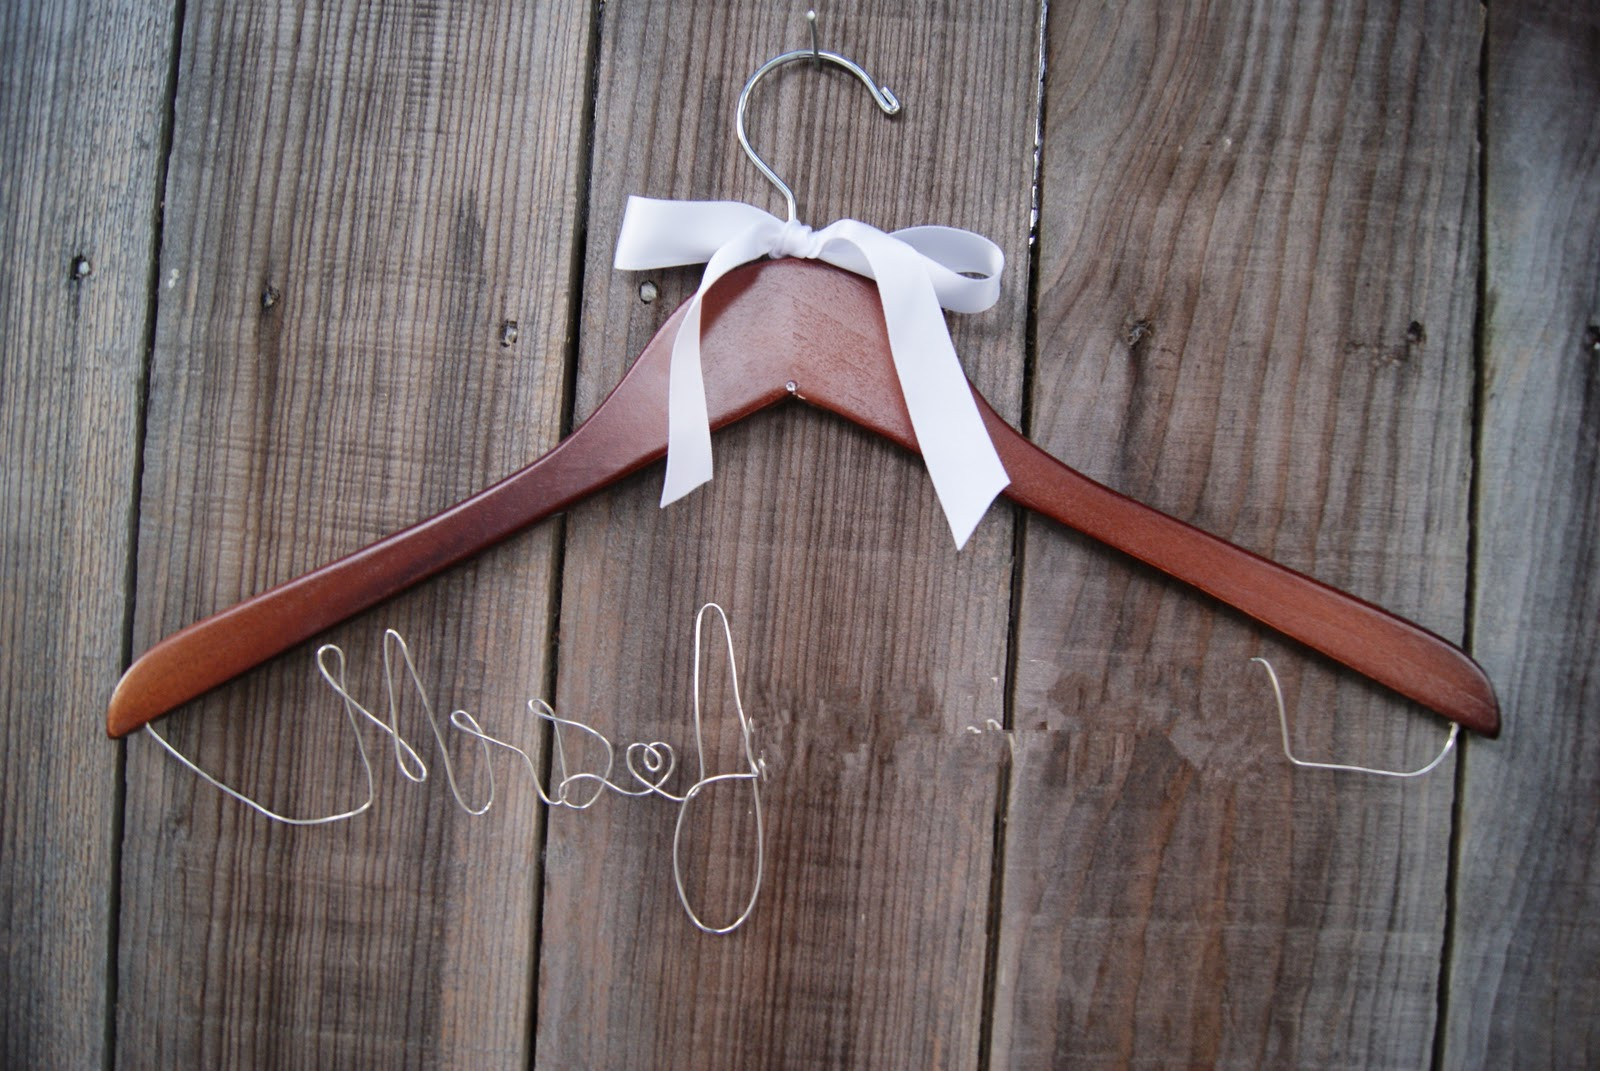 Best ideas about DIY Wedding Hangers
. Save or Pin A Rustically Elegant Wedding A DIY Wedding Hanger Now.